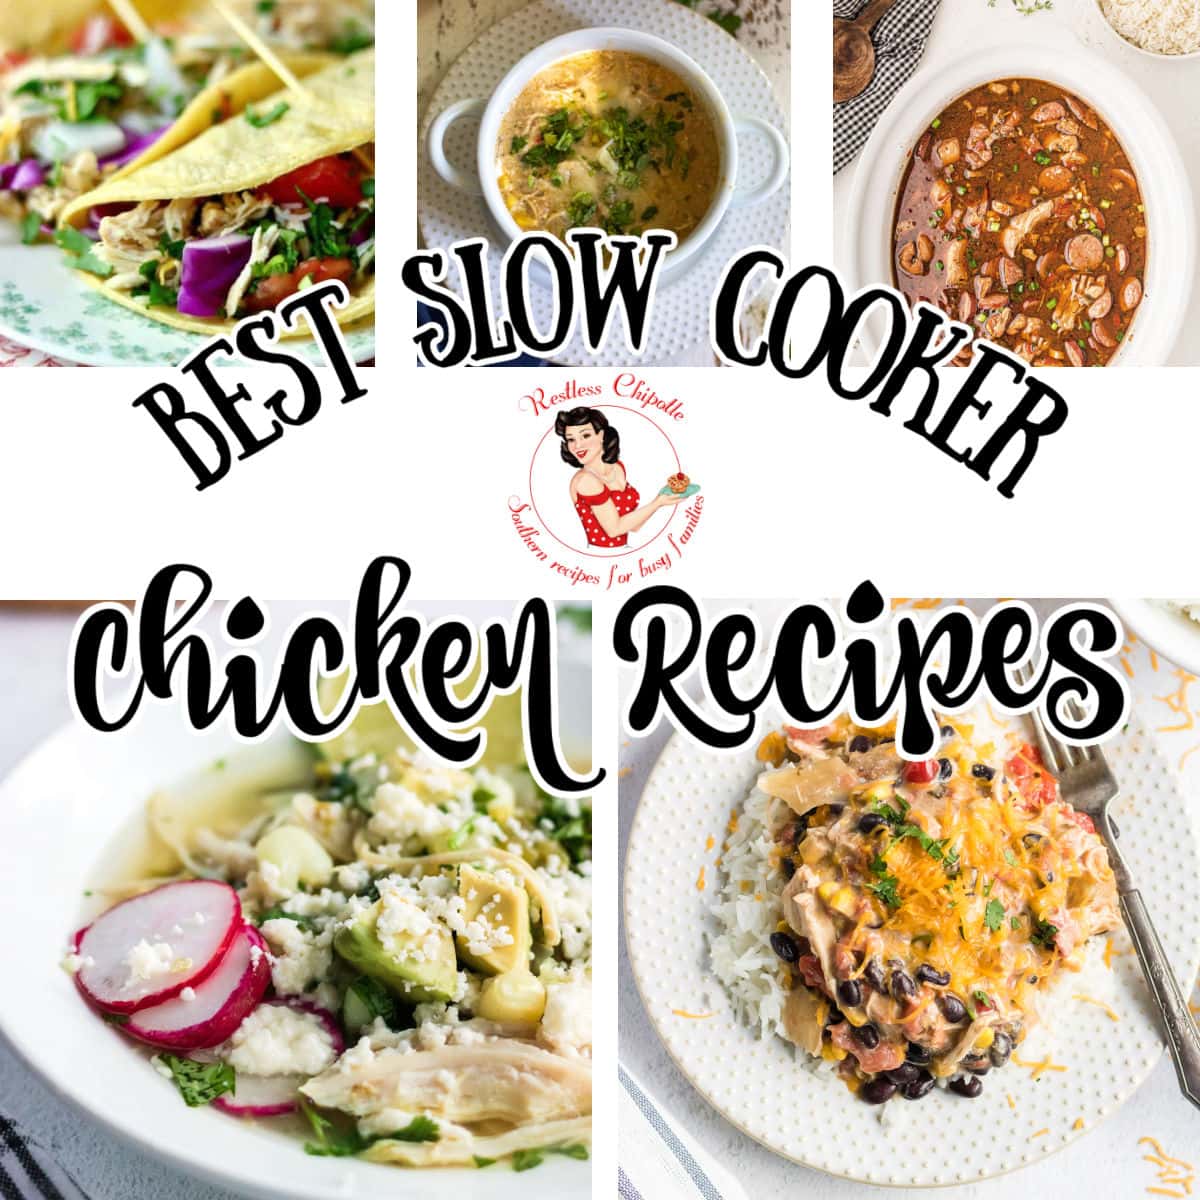 https://www.restlesschipotle.com/wp-content/uploads/2021/01/slow-cooker-chicken-recipes.jpg